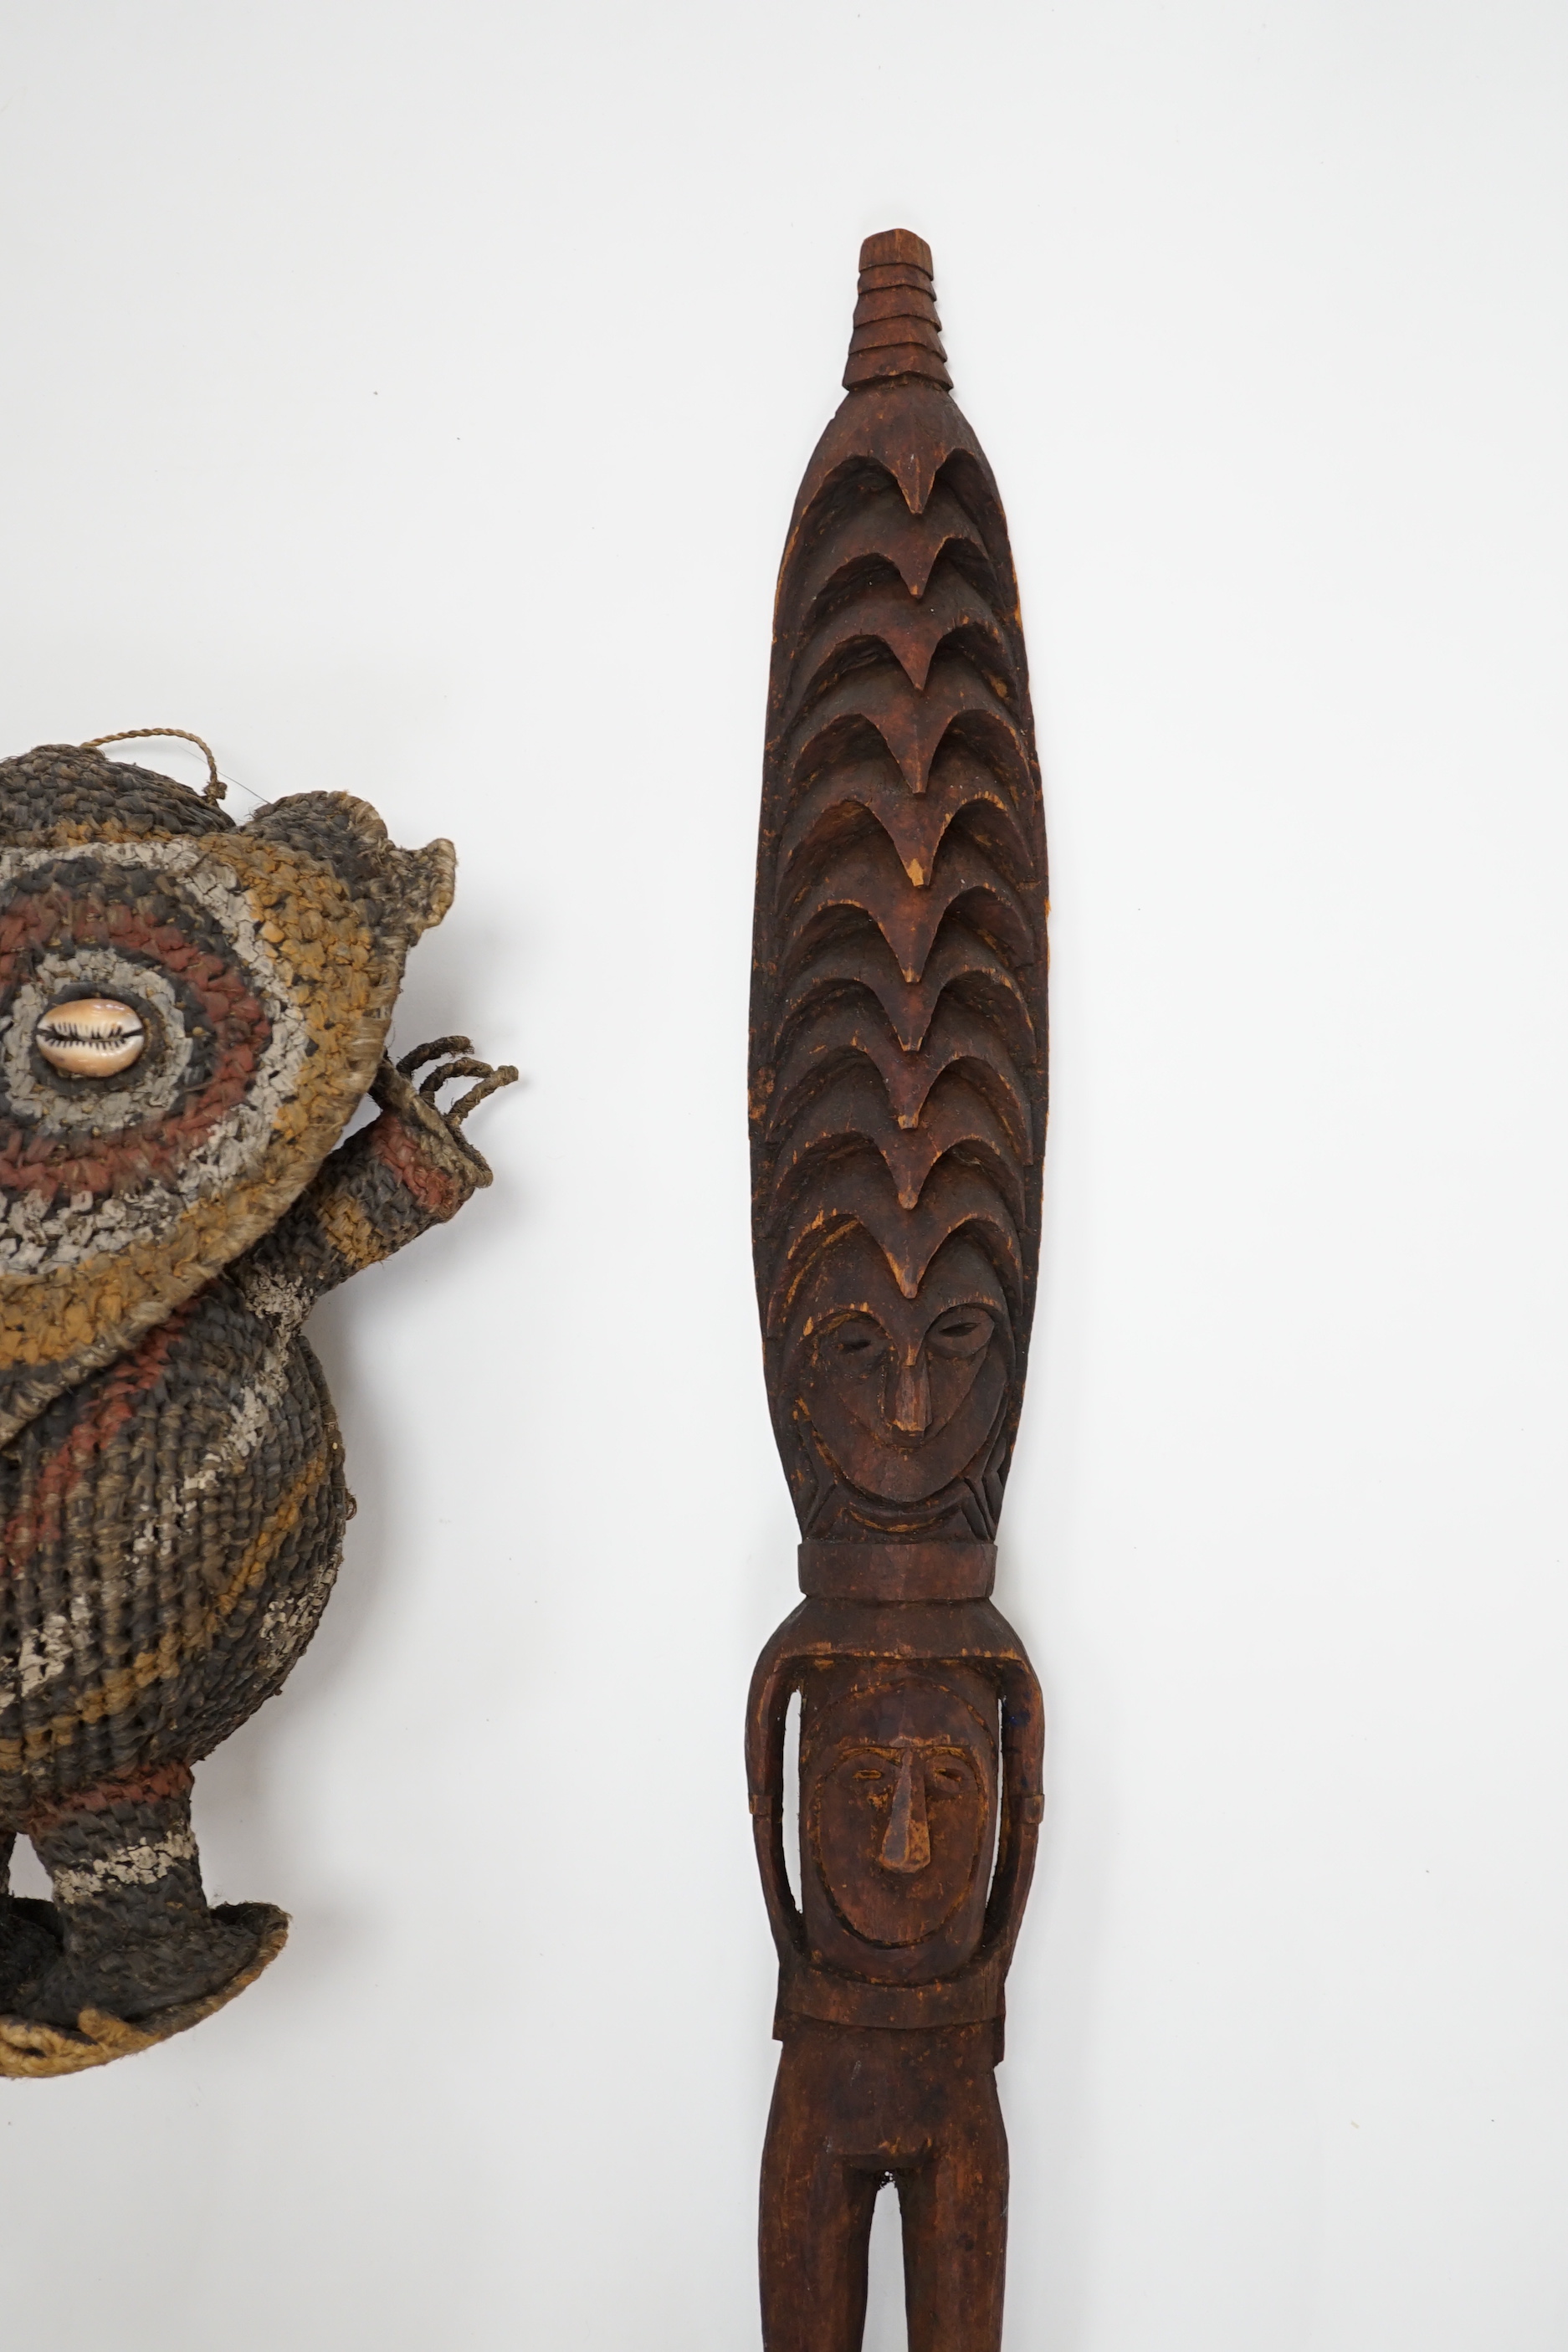 Two Papua New Guinea figures